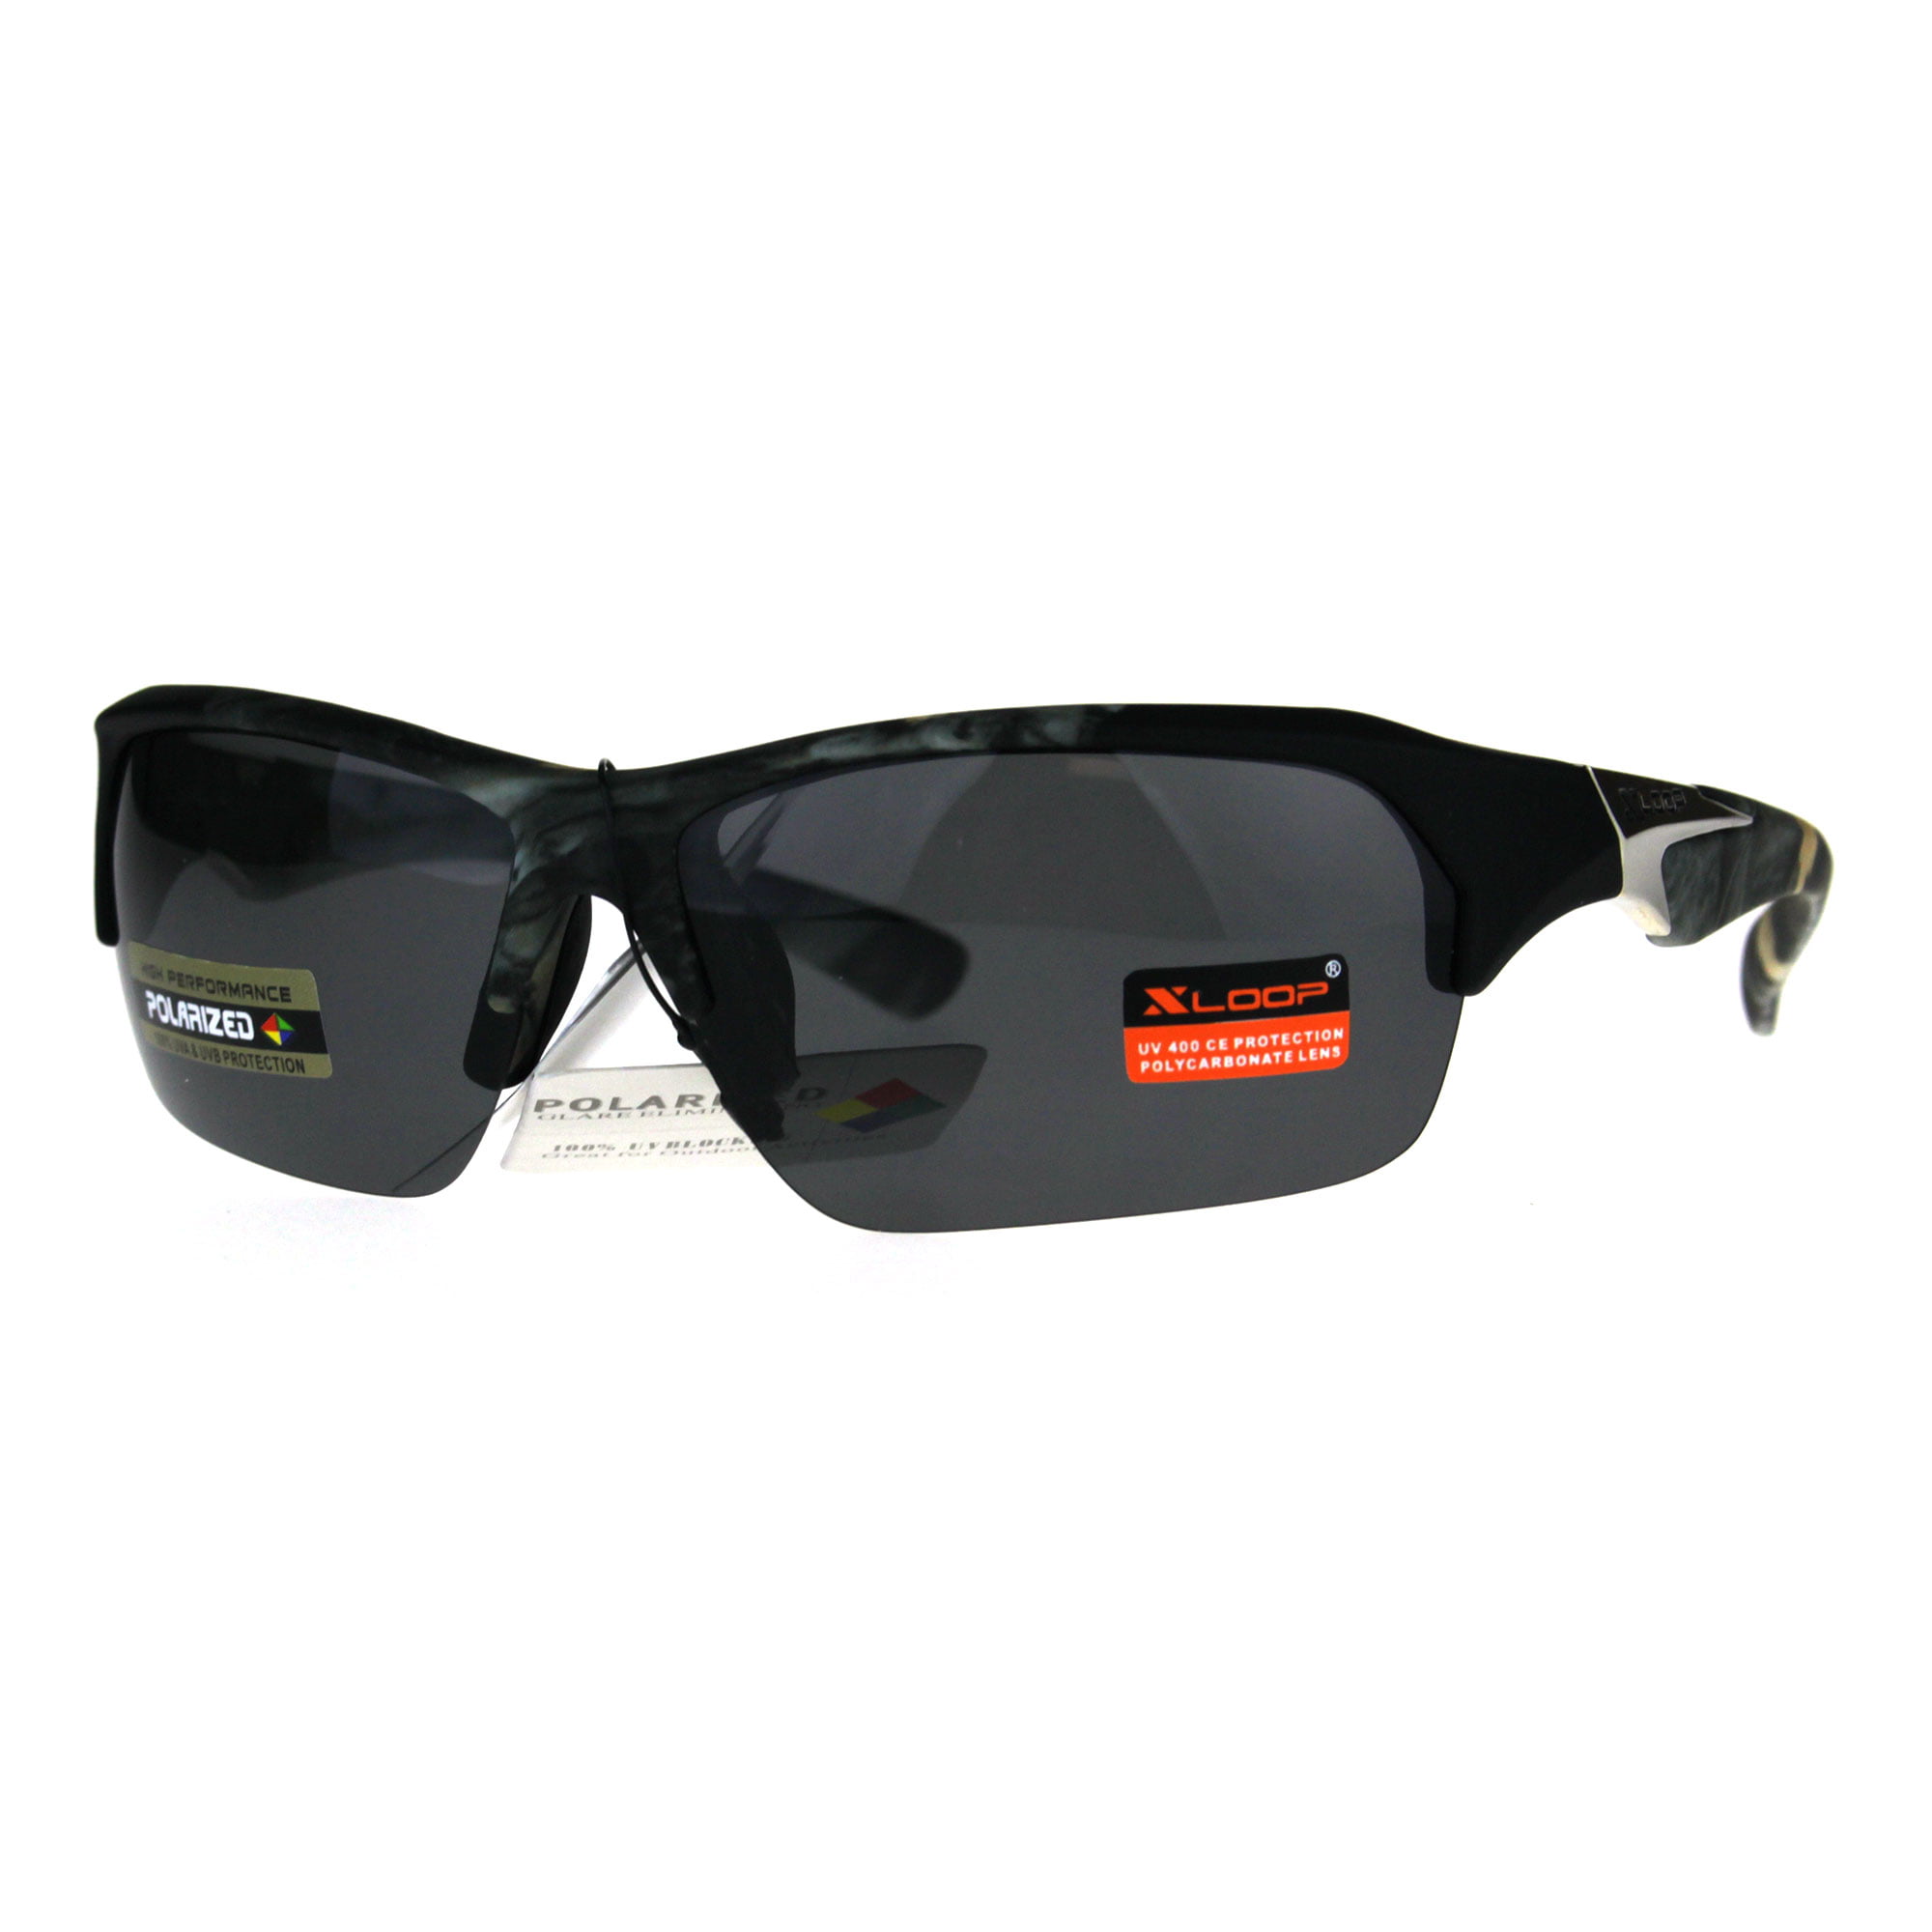 Polarized Mens Metal Half Frame X-Loop Sunglasses Fishing Hiking Water Sports 